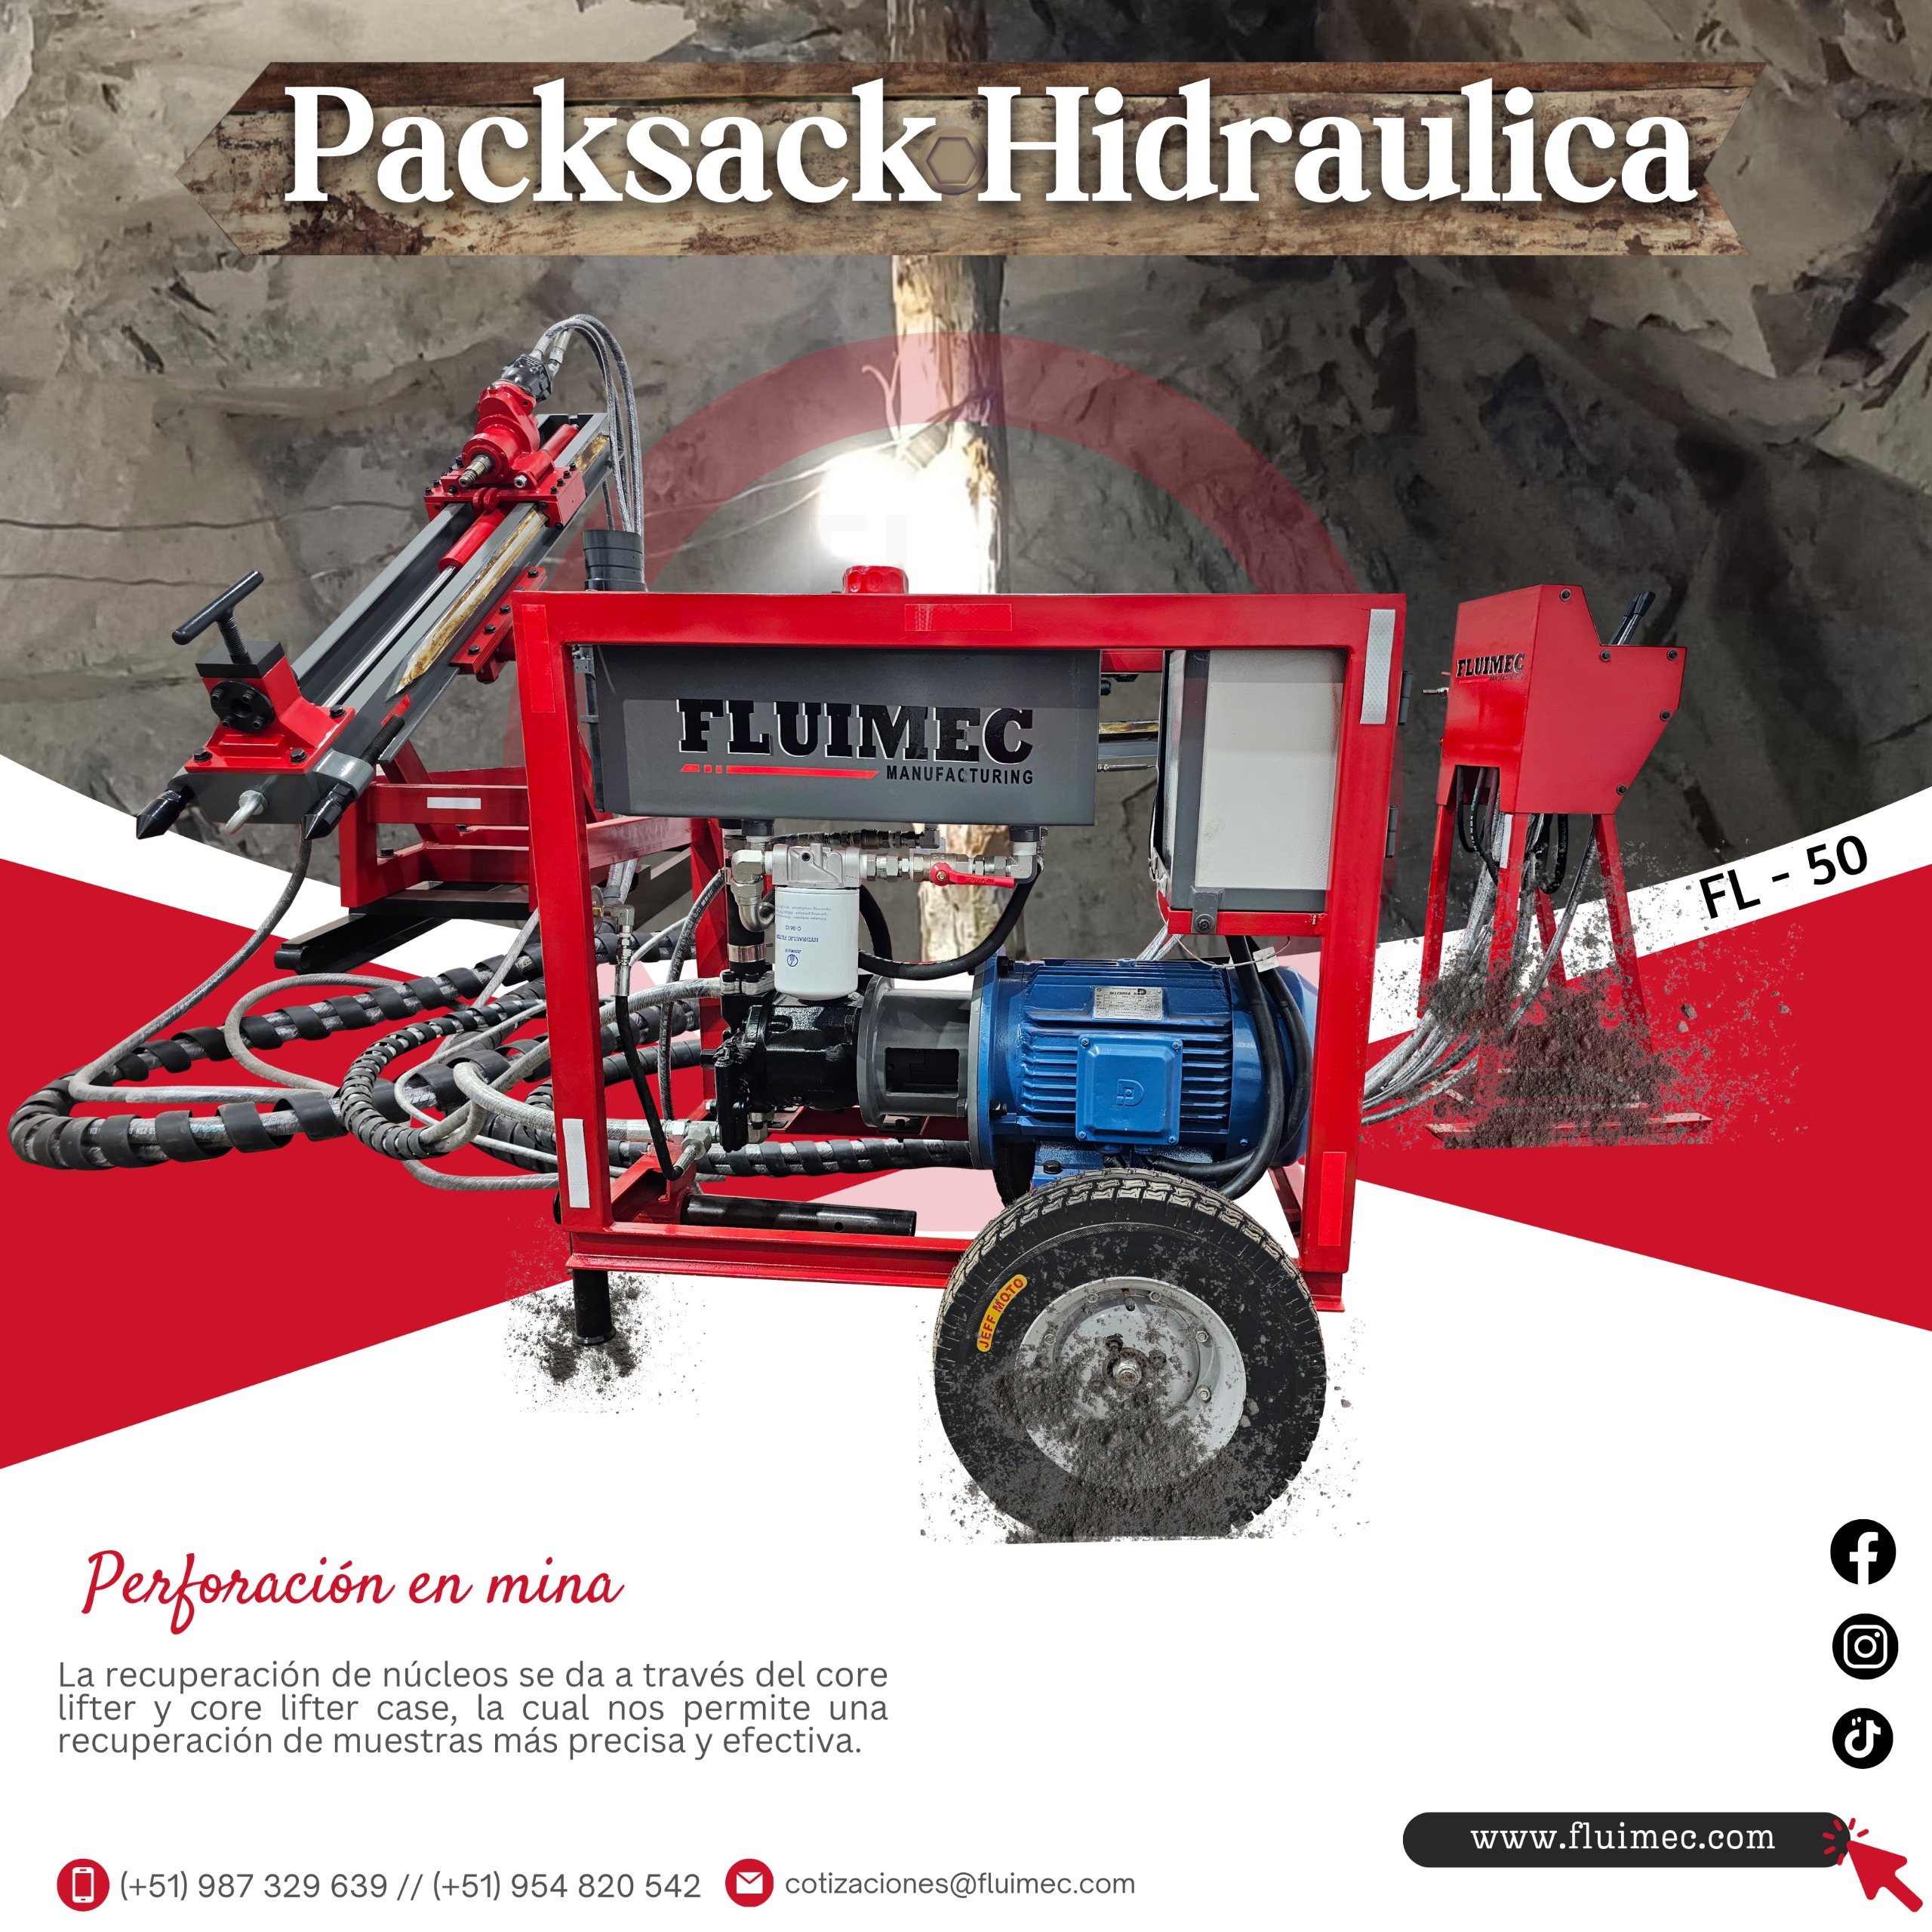 Packsack Hidraulica FL-50 FLUIMEC 